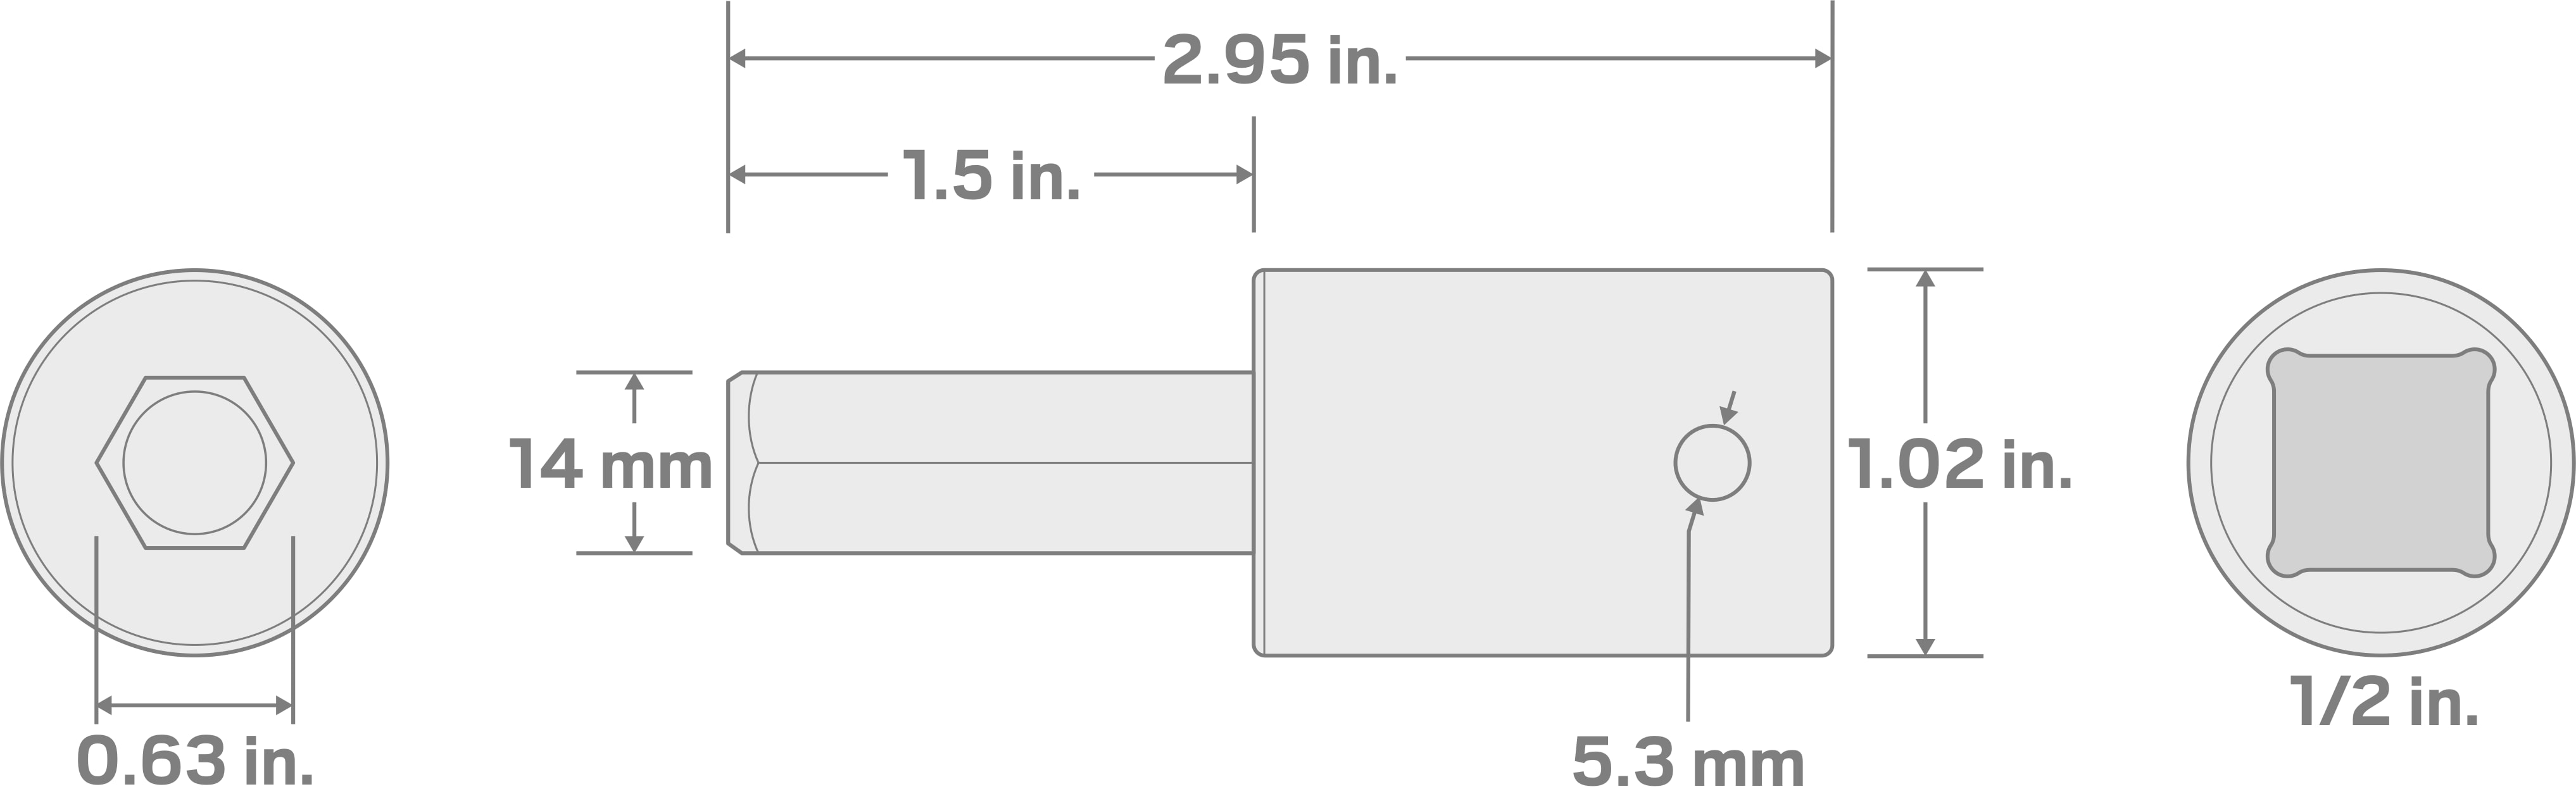 Specs for 1/2 Inch Drive x 14 mm Hex Impact Bit Socket